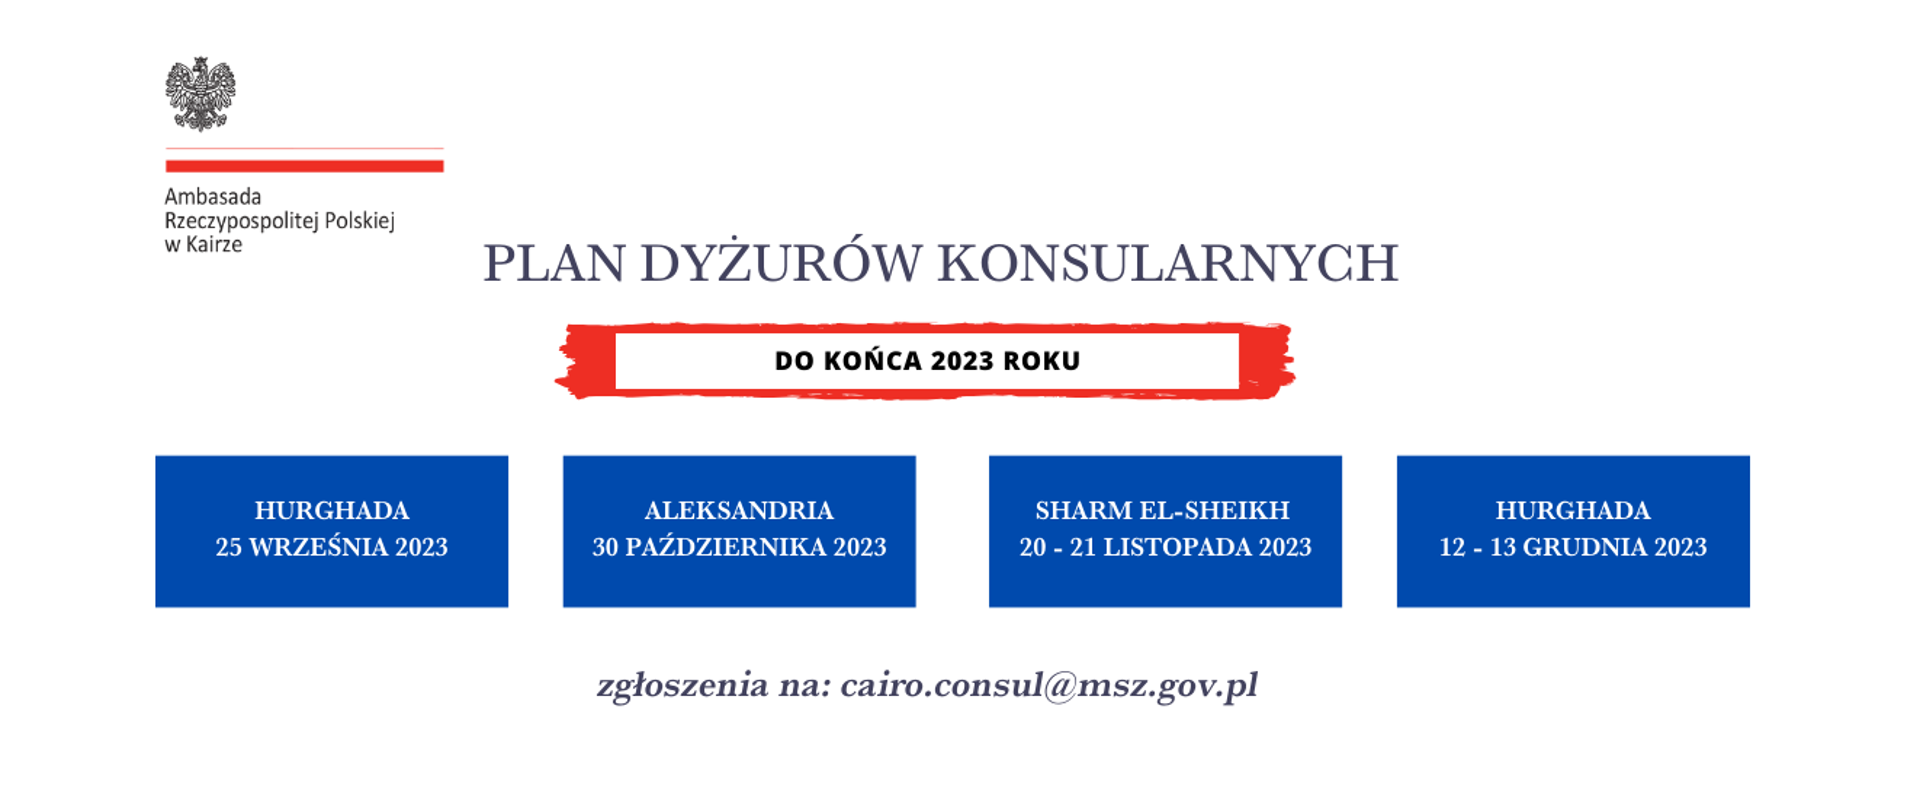 Plan dyżurów konsularnych